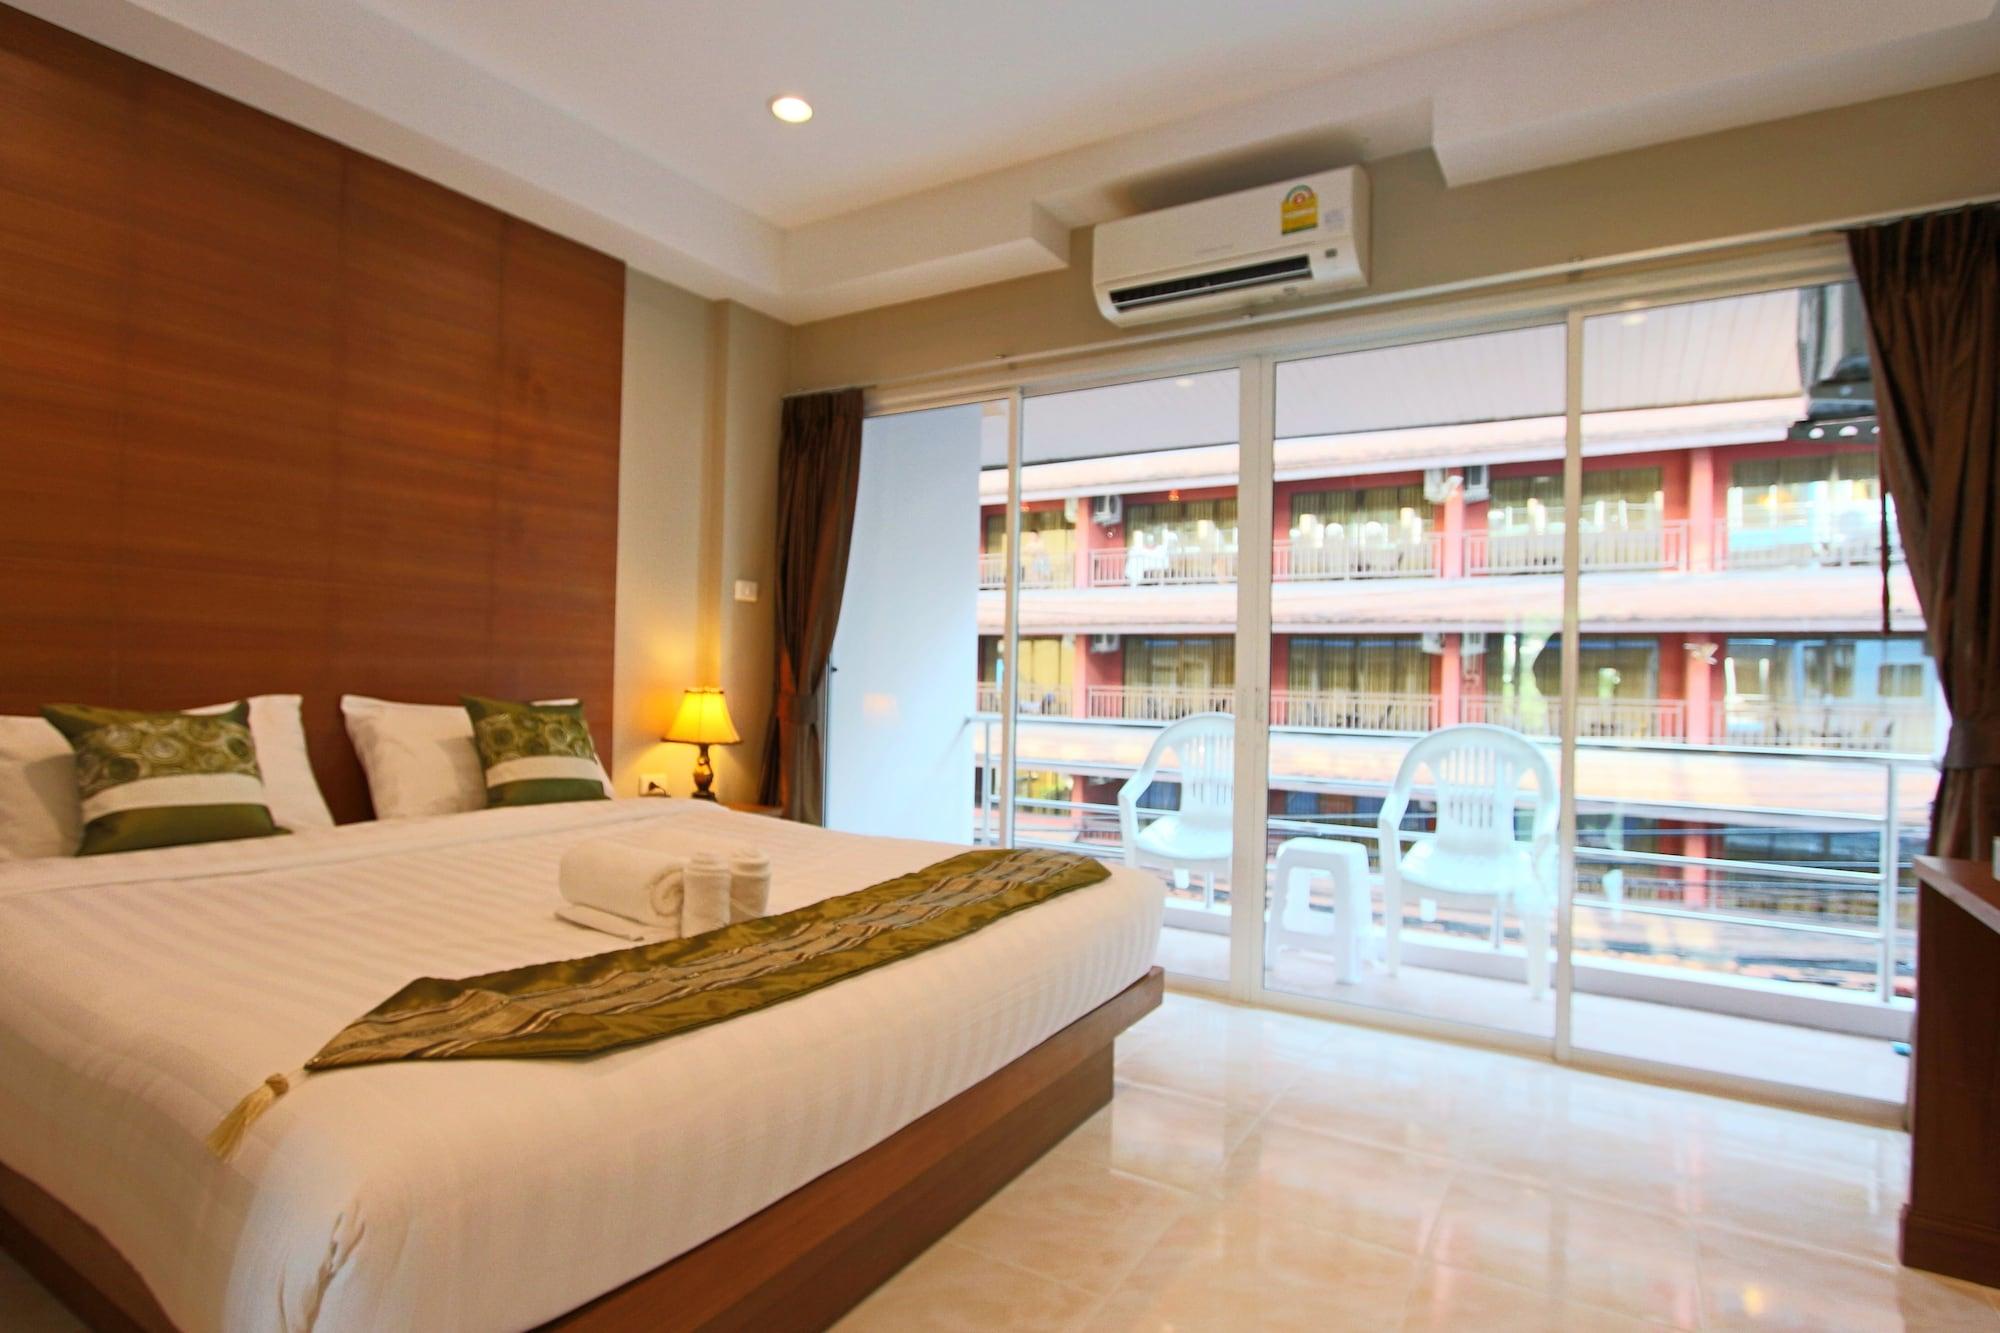 Good Nice Hotel Patong Εξωτερικό φωτογραφία